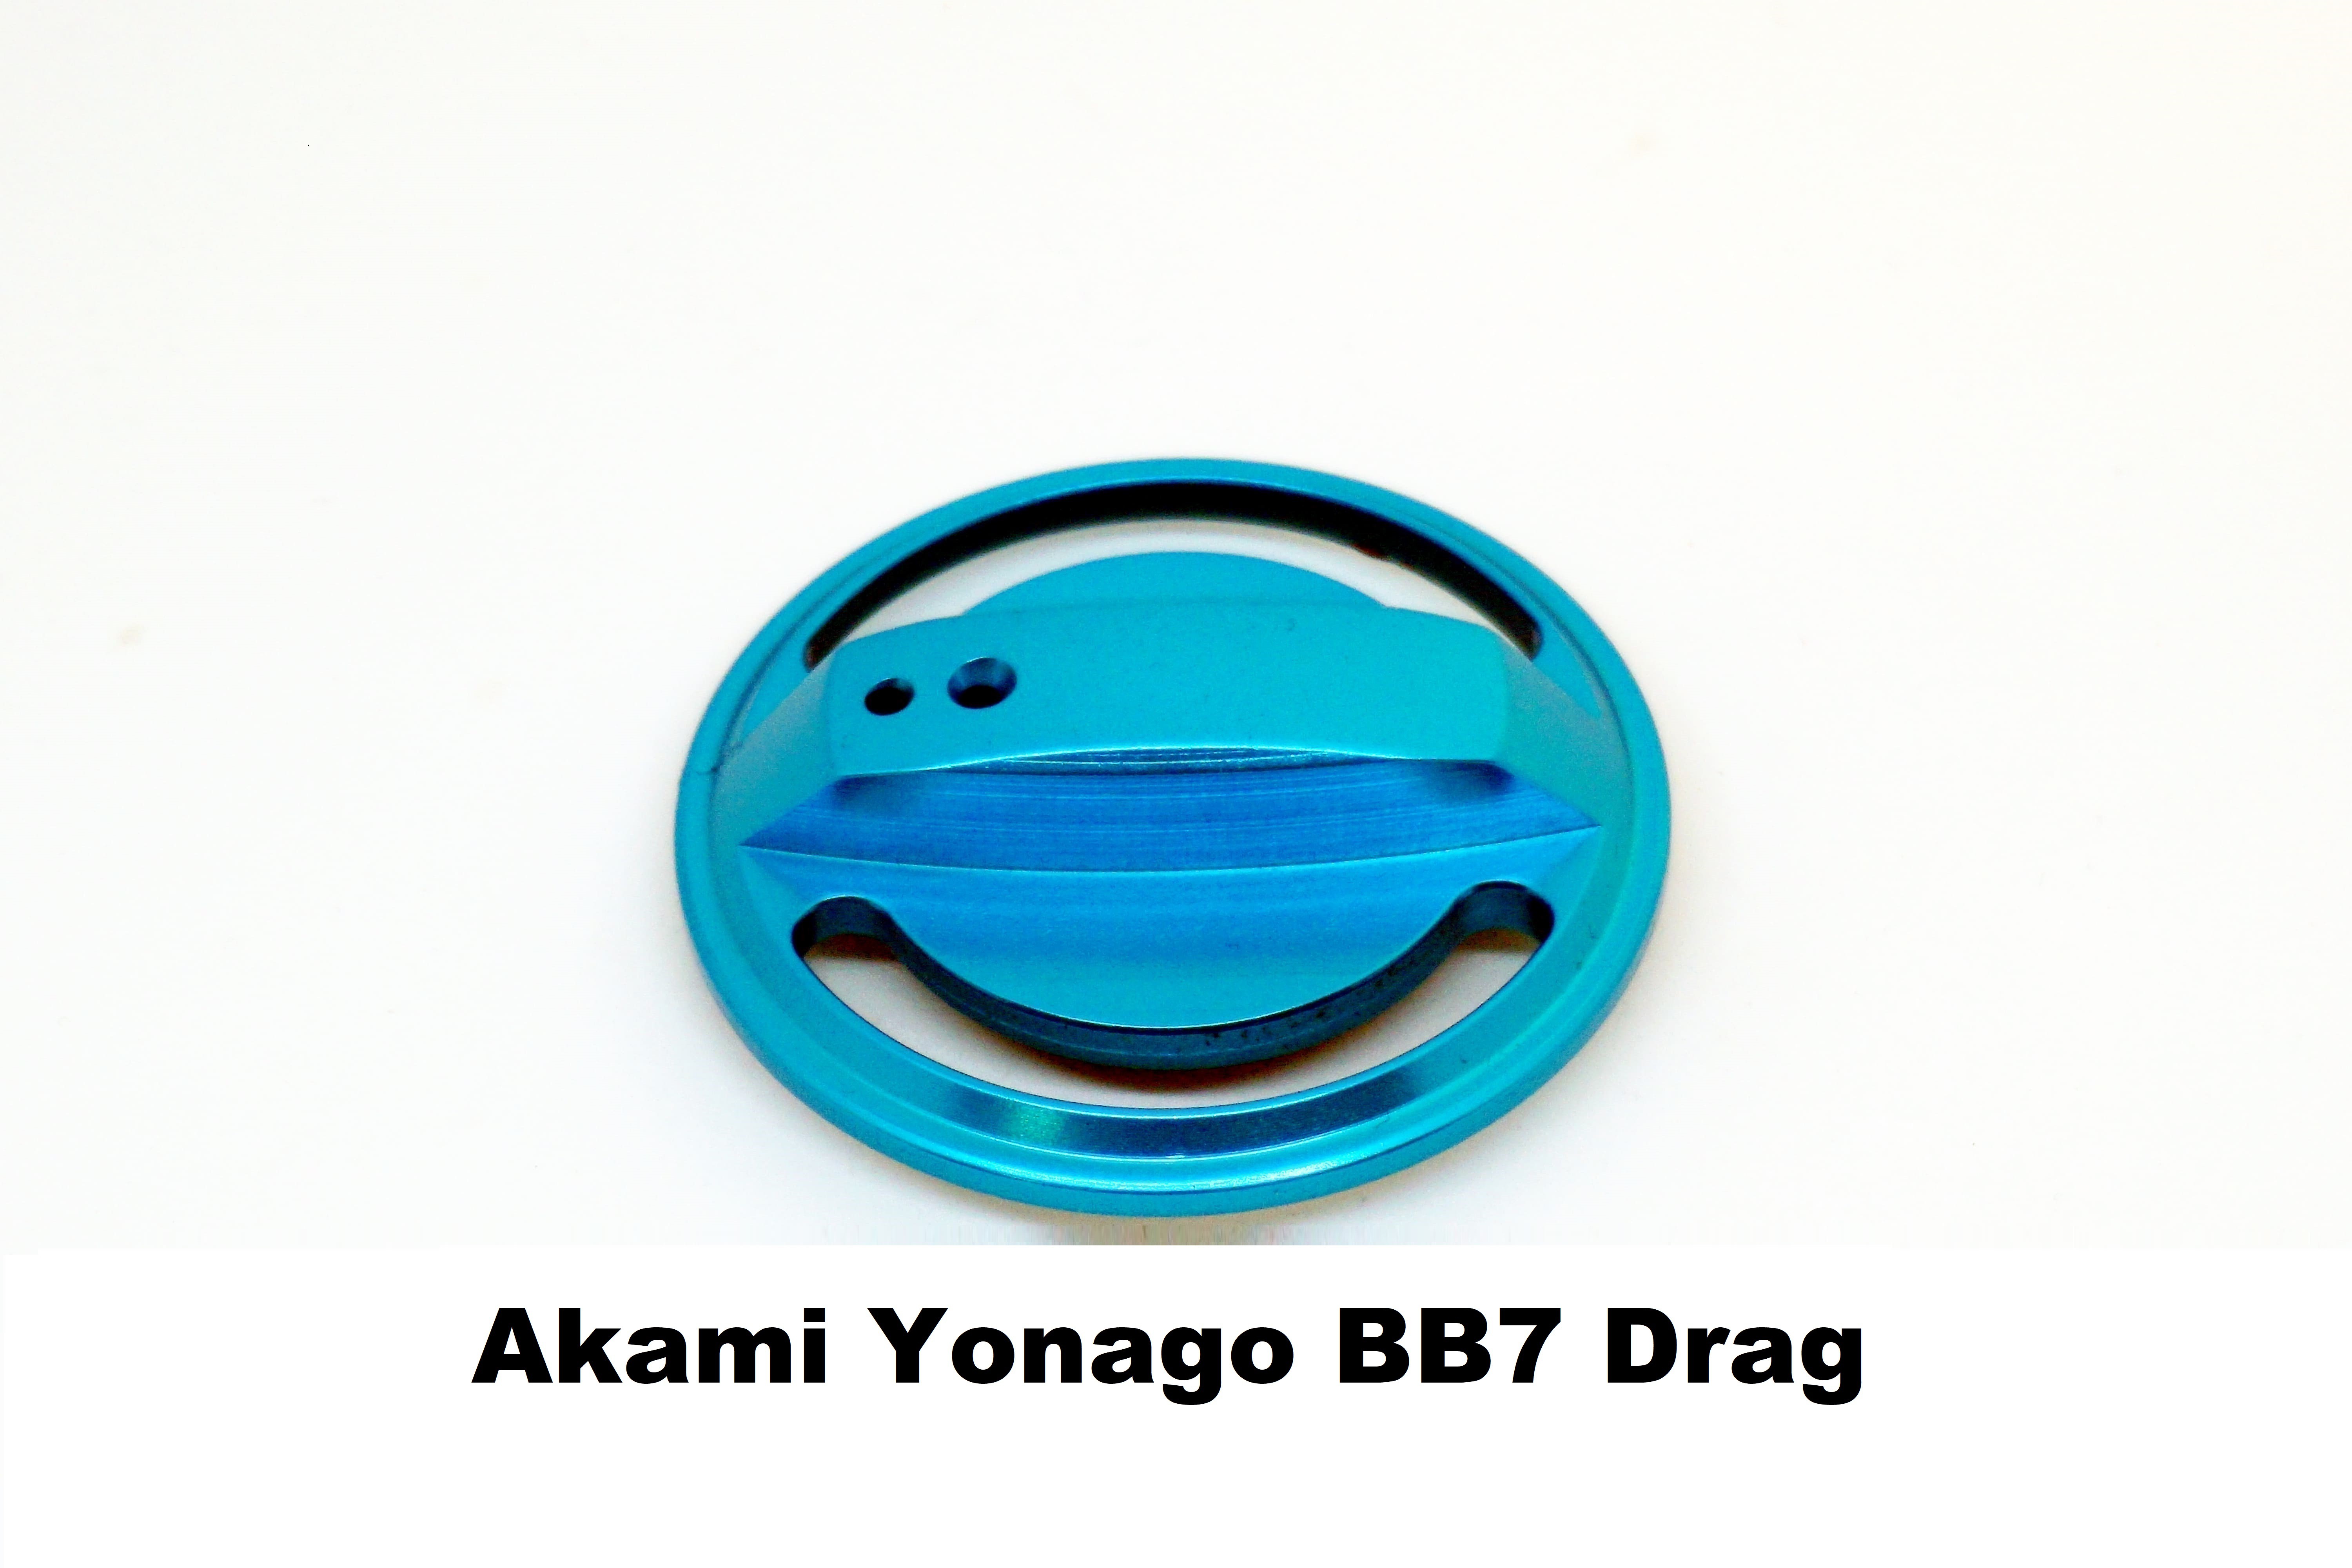 Spina del Freno Akami Yonago BB7 Drag